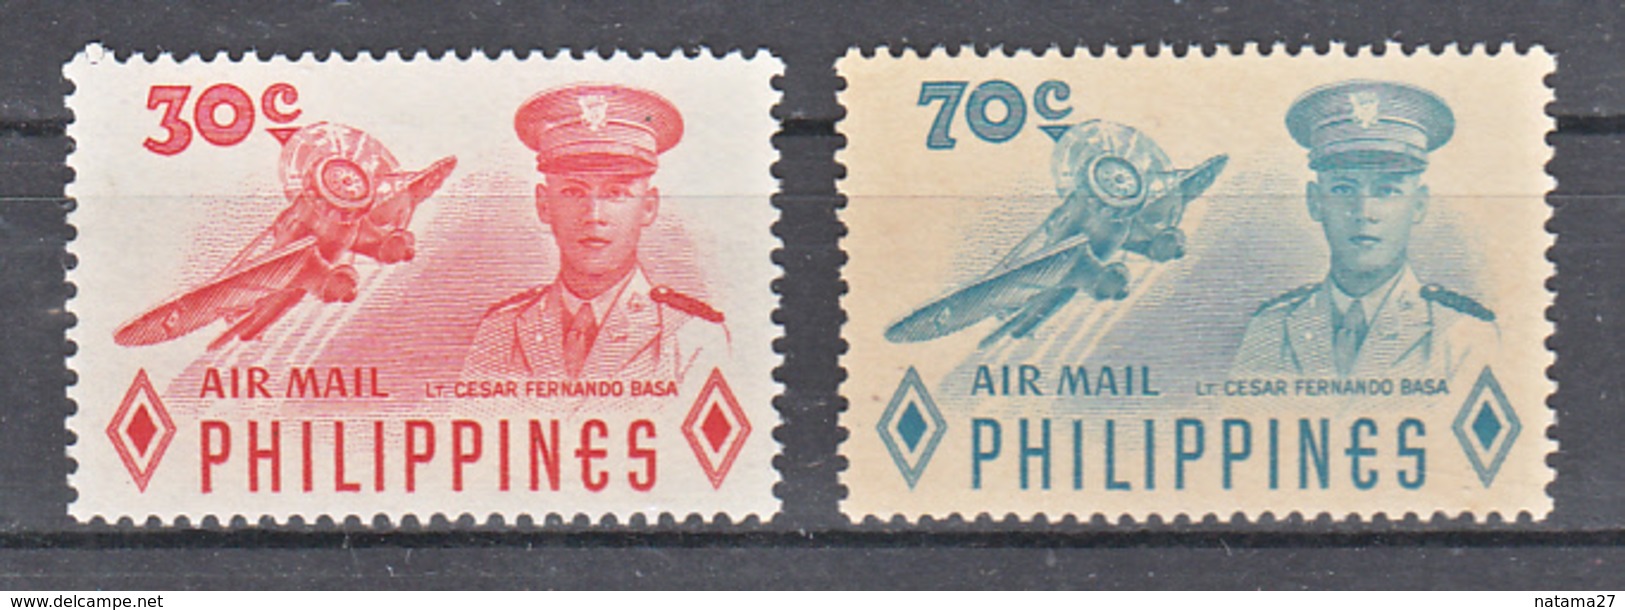 Filippine Philippines Philippinen Filipinas 1955 Lieutenant Cesar Basa, Air Mail Set Of 2 Stamps, Toned Gum - MNH** - Filippijnen